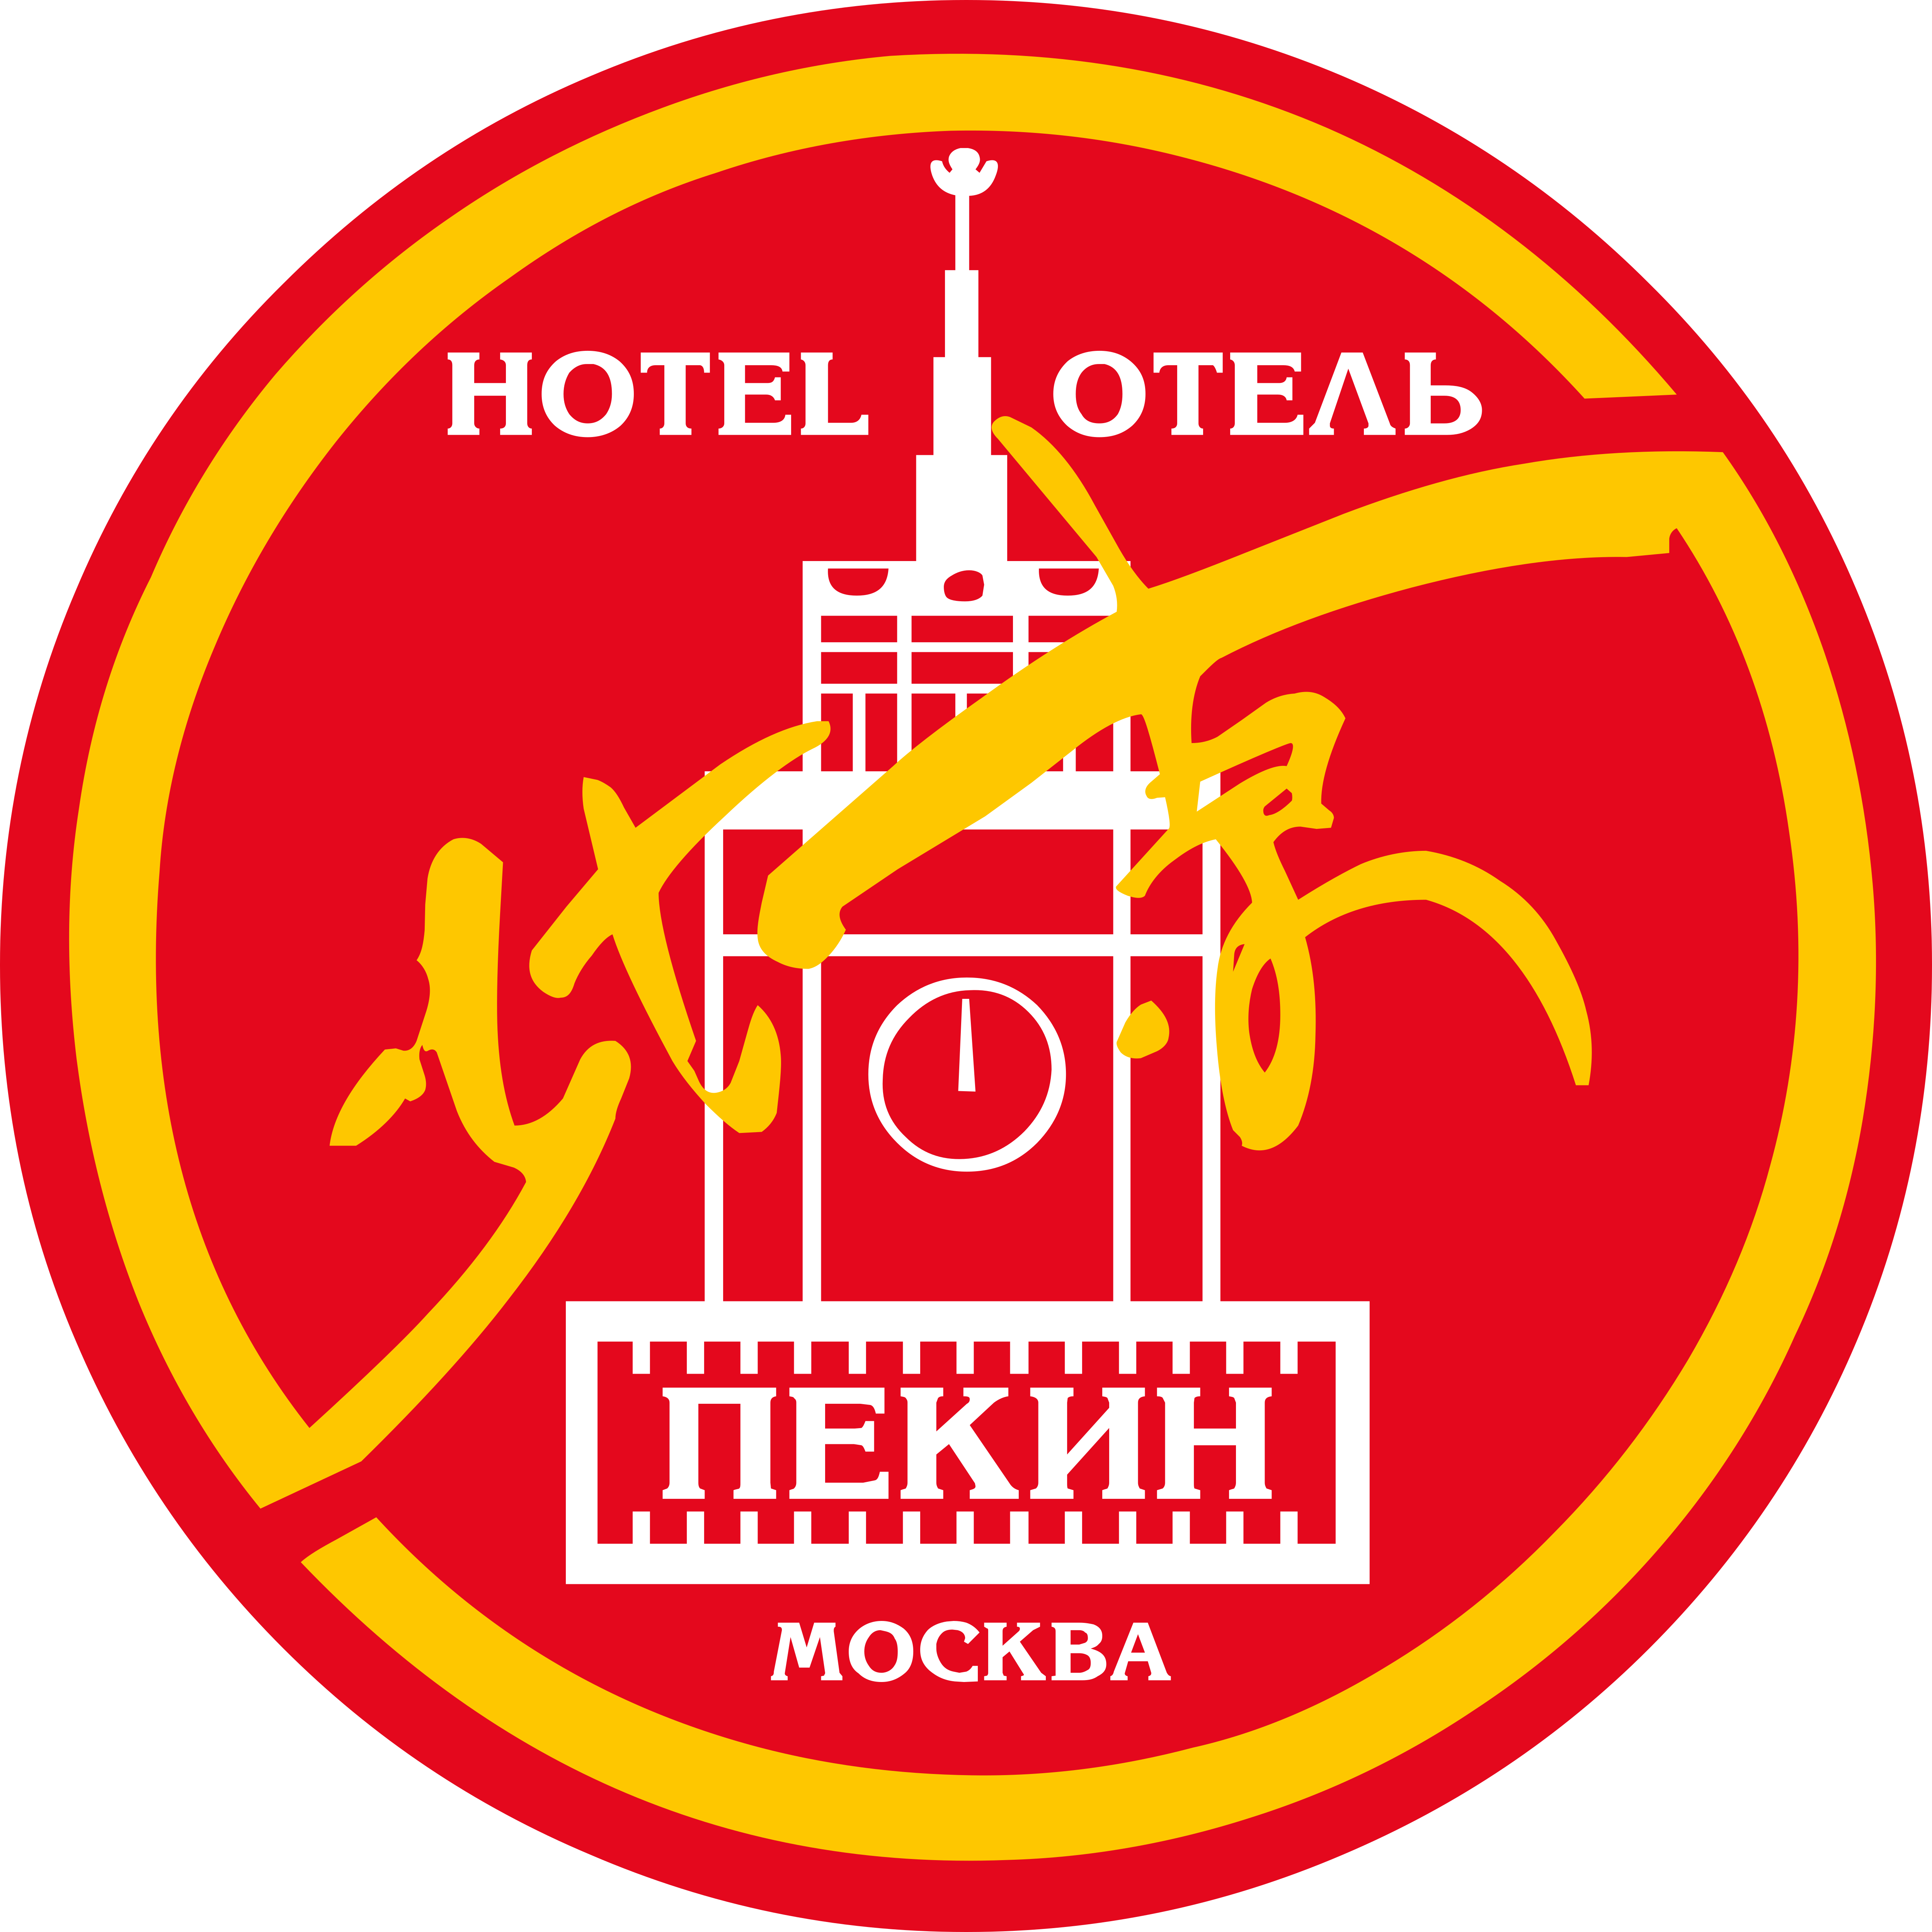 Pekin hotel logo transparent download #41803